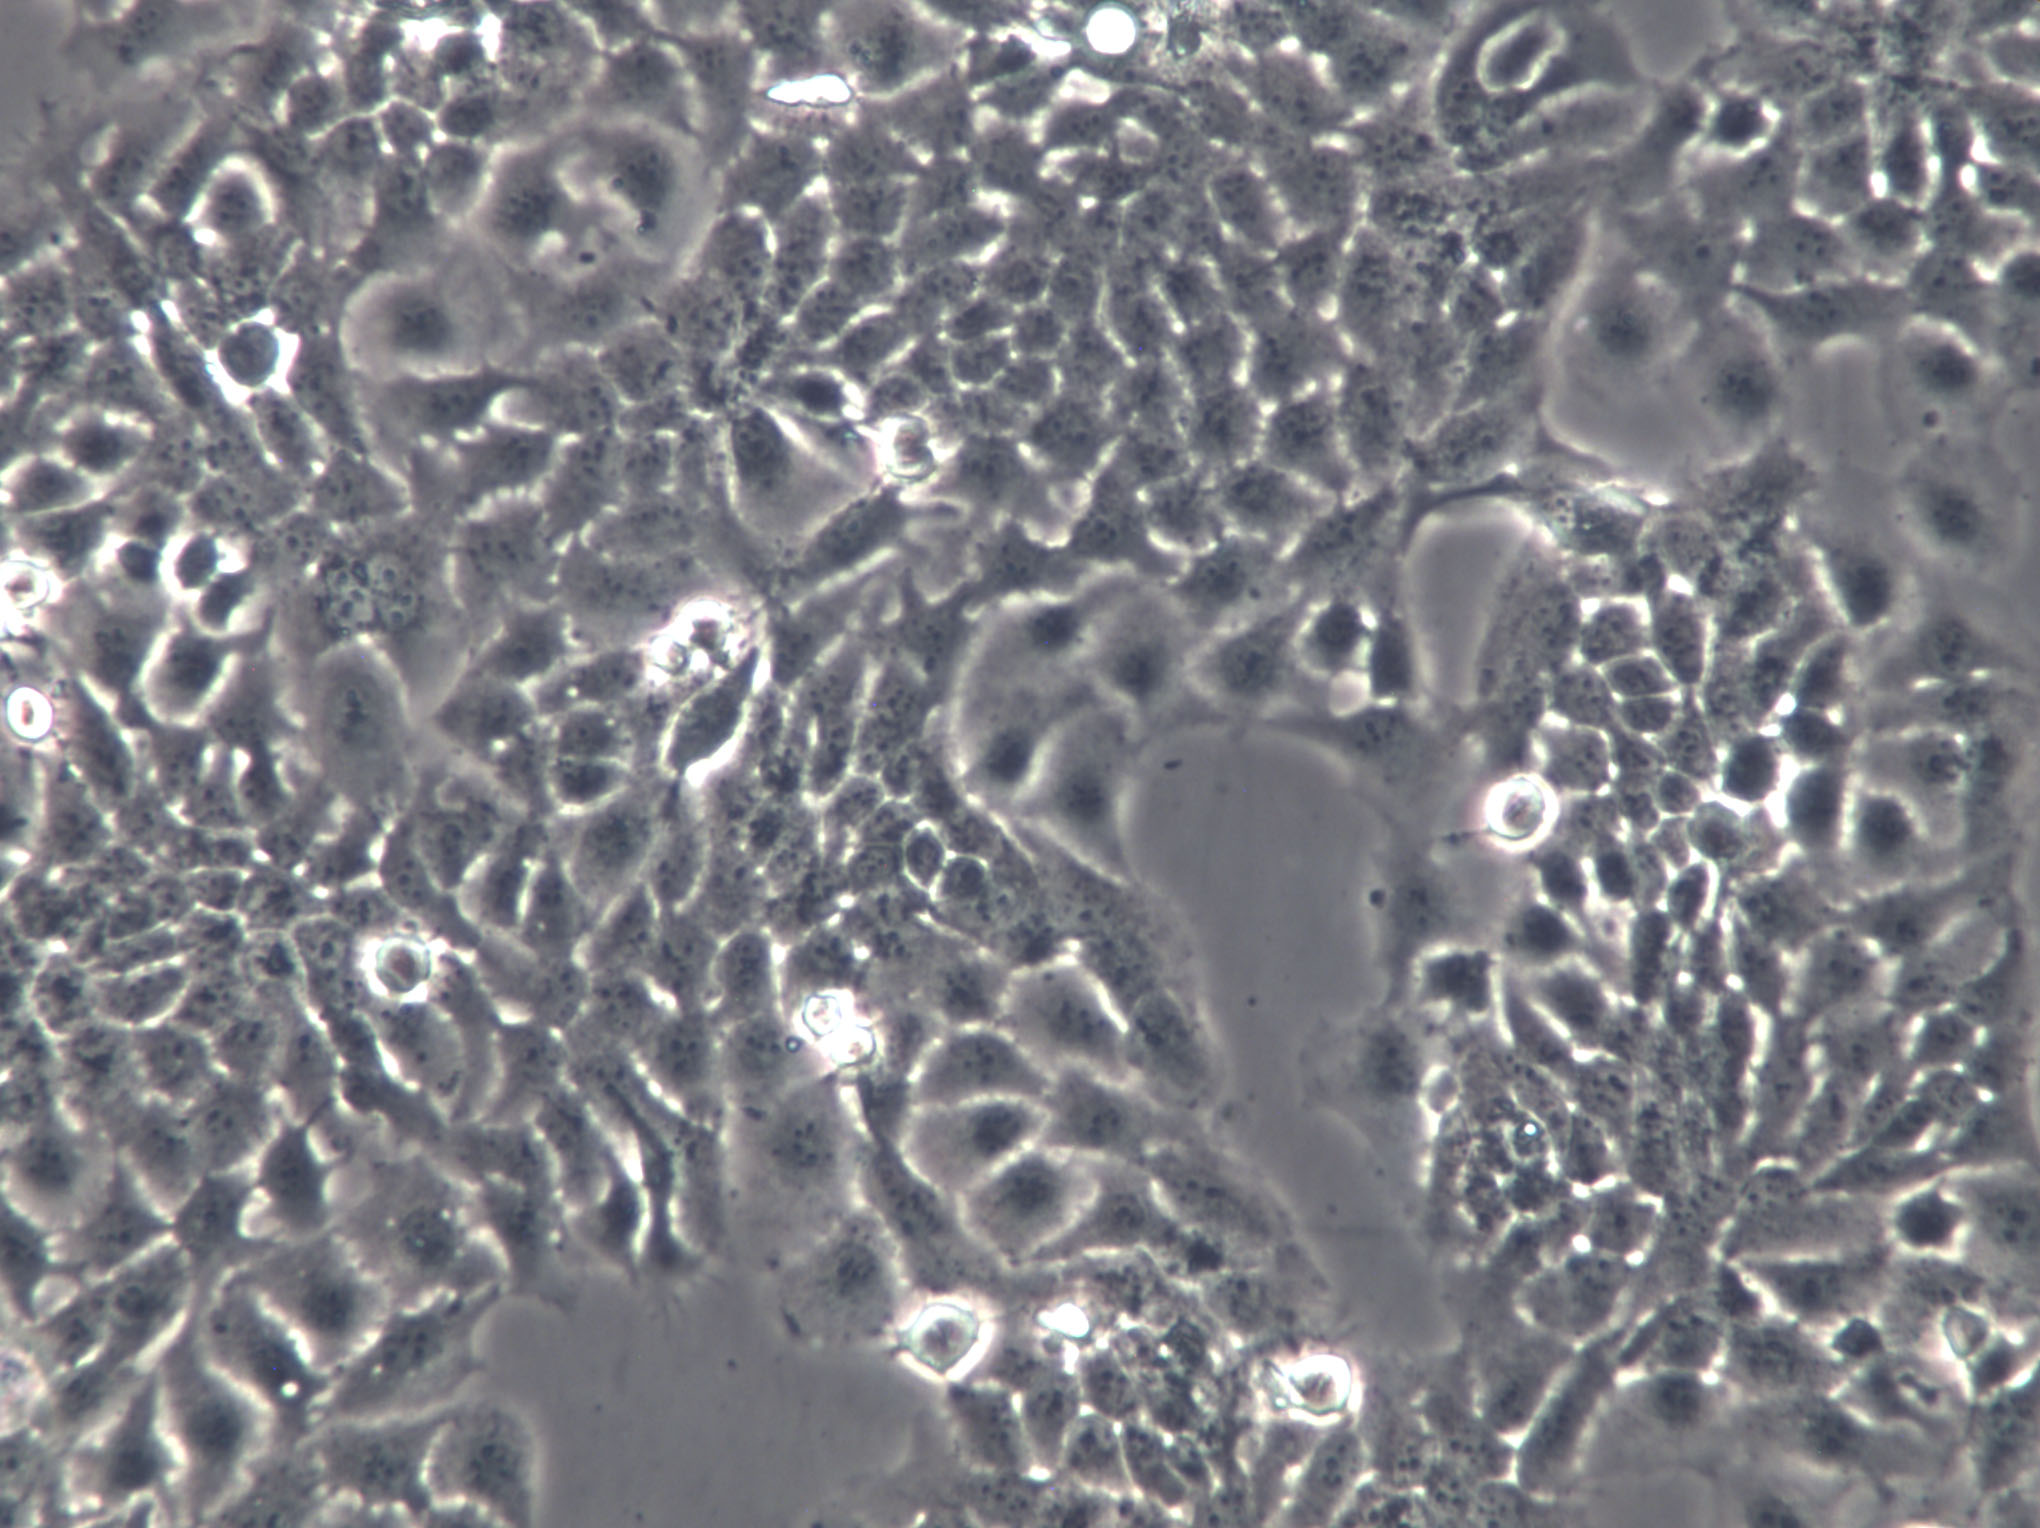 SNU-216 Cells(赠送Str鉴定报告)|人胃癌细胞